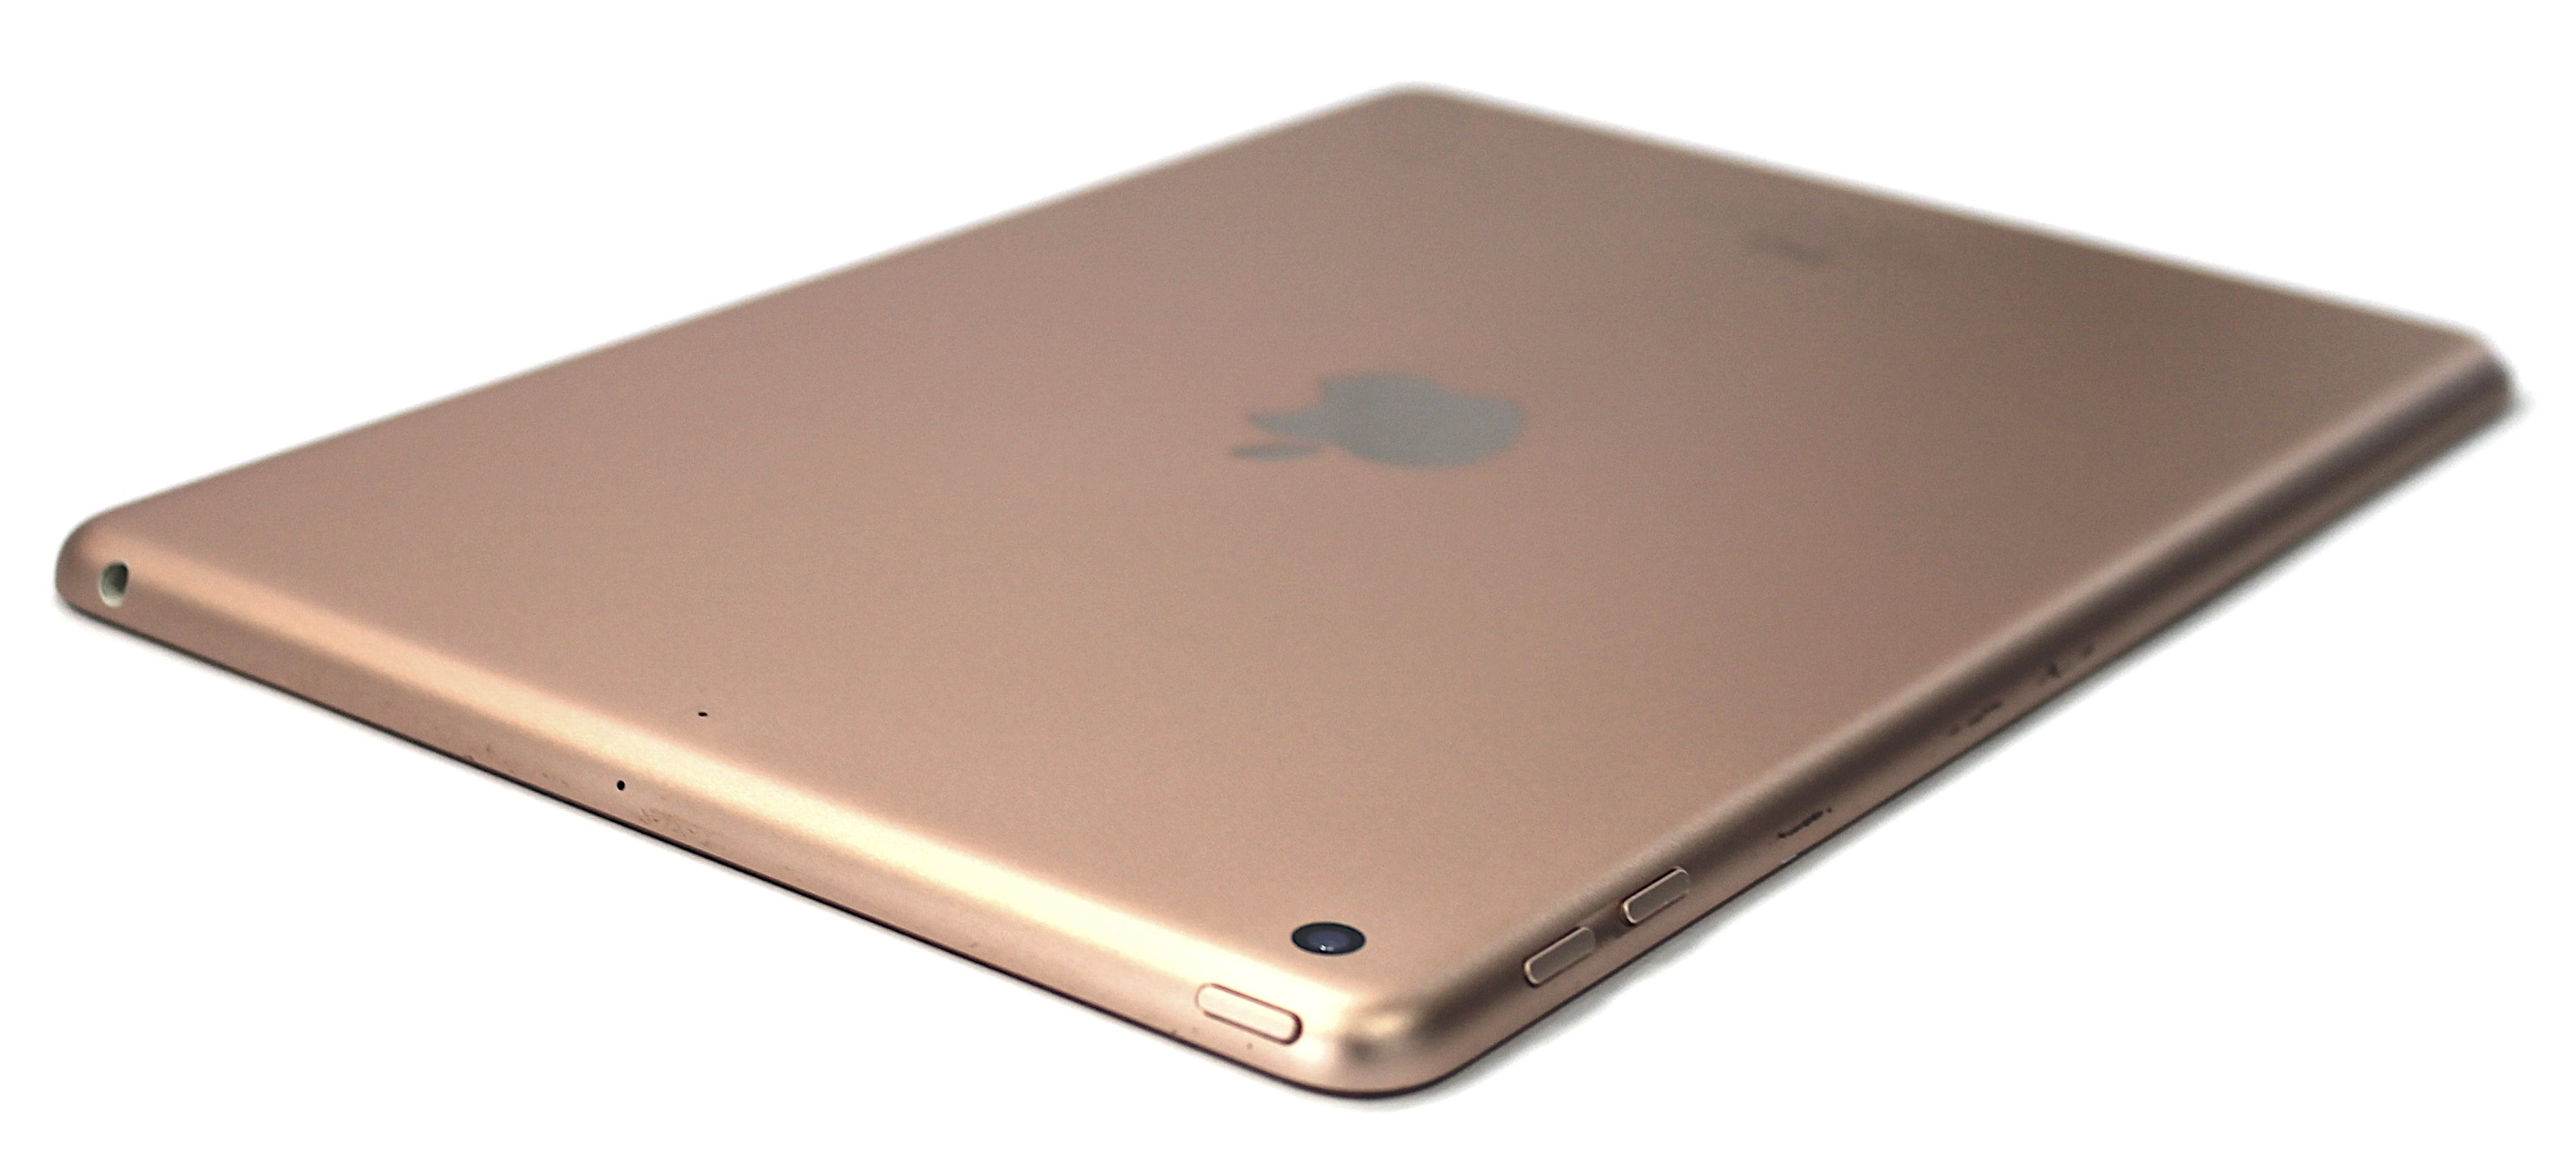 Apple iPad 6th Generation Tablet, 32GB, Wi-Fi, Rose Gold, A1893